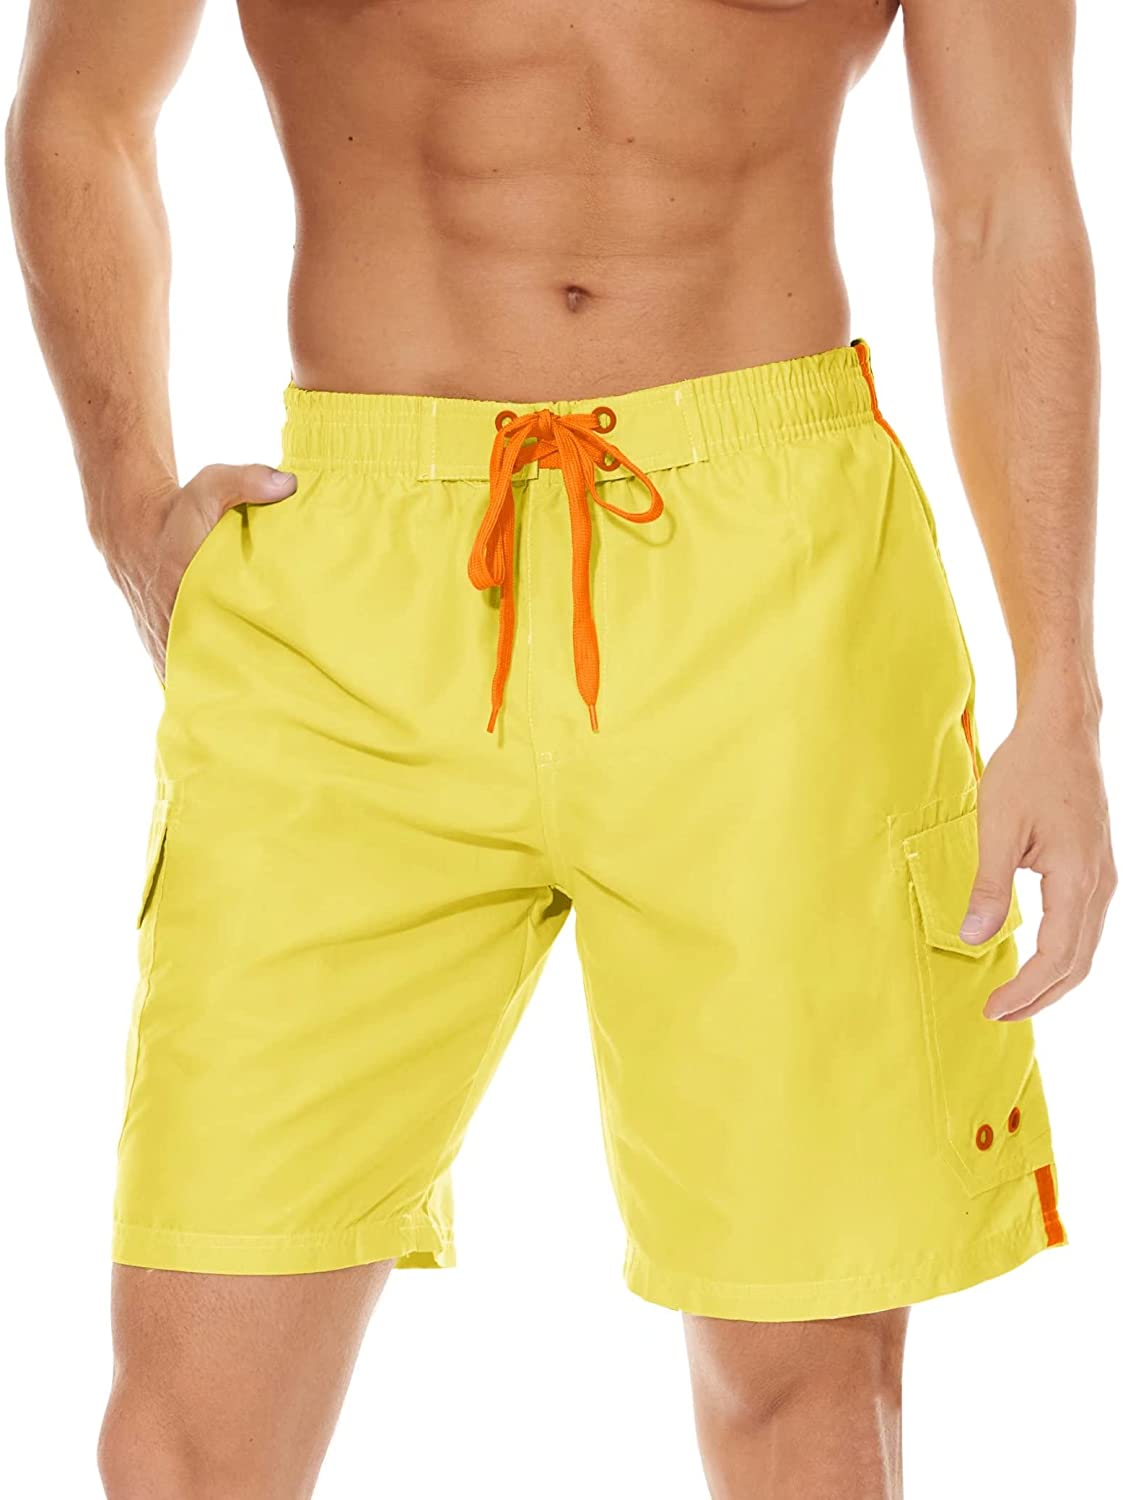 MAGCOMSEN Men's Swim Trunks with Mesh Linner 4 Pockets Quick Dry Beach Shorts Board Shorts Summer Swim Shorts 